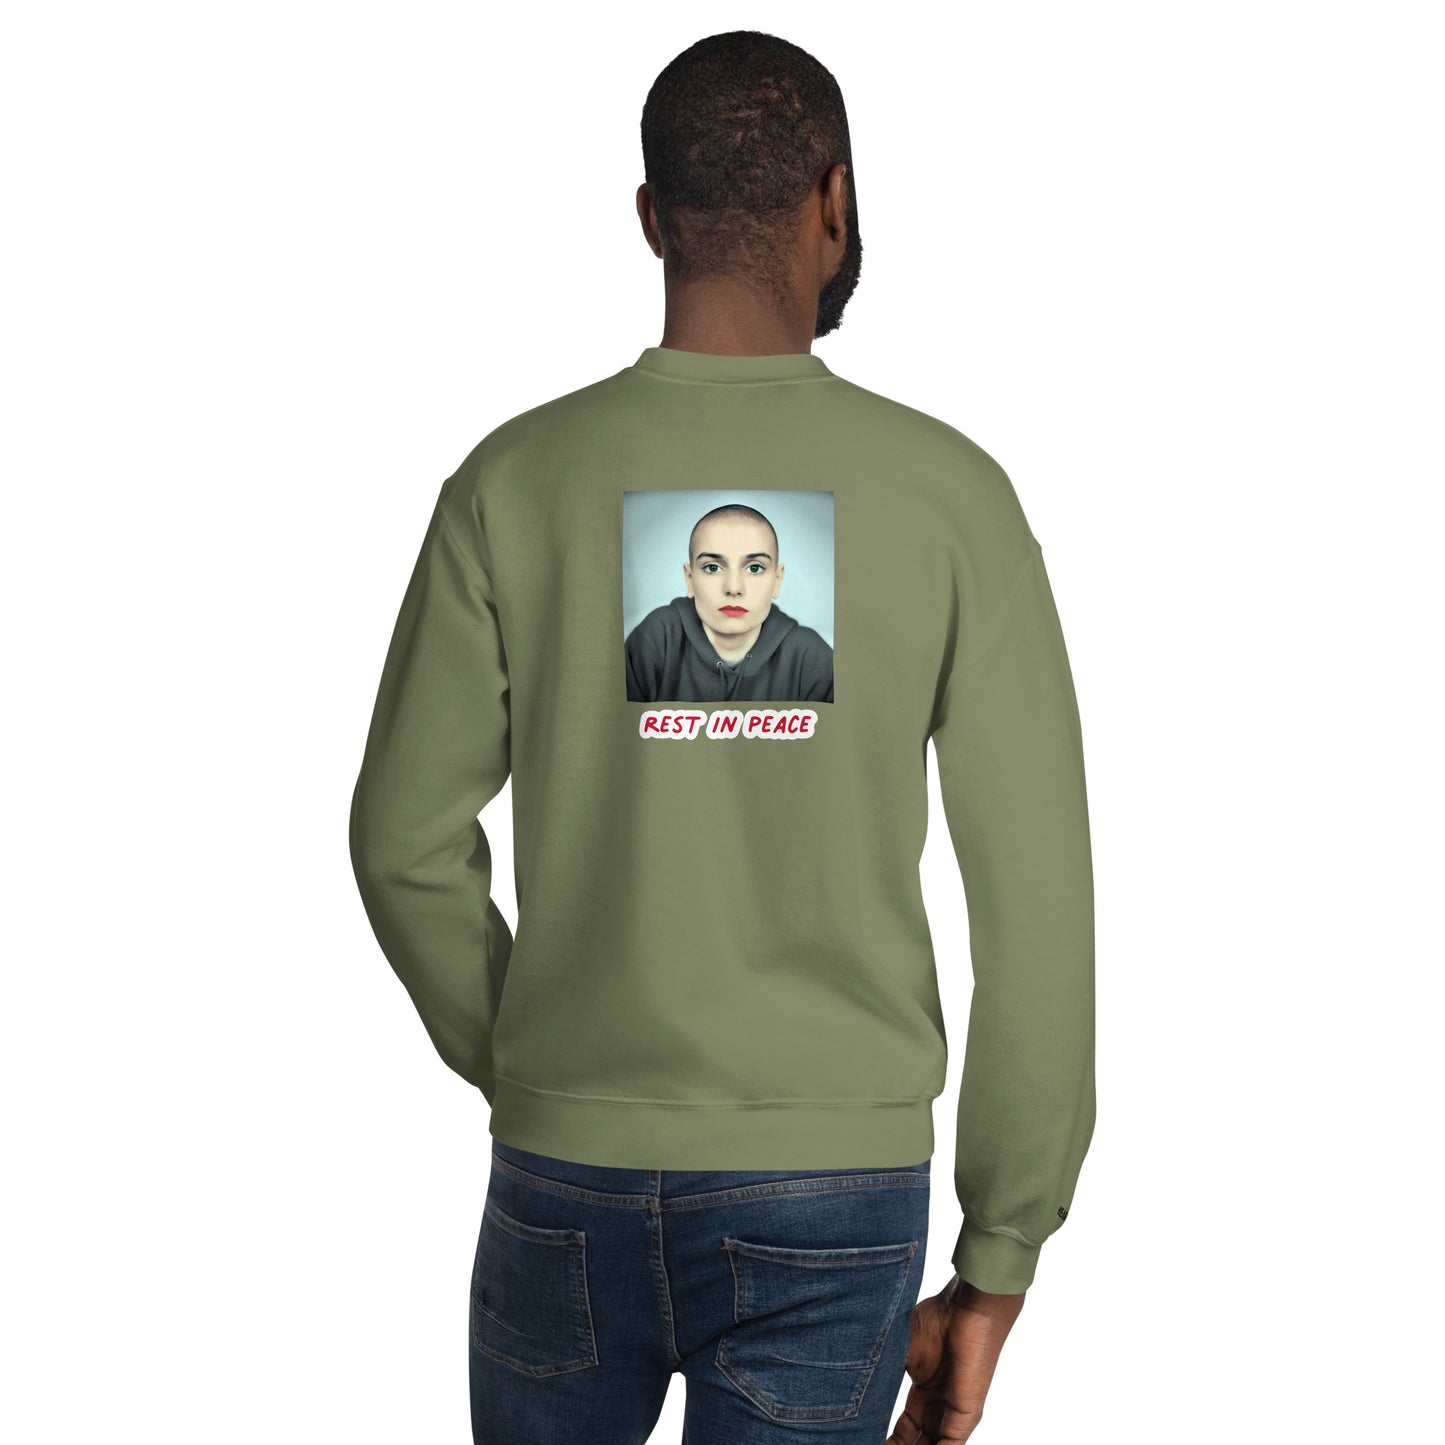 Sinead O'Connor 1966 - 2023 Embroidered Unisex Sweatshirt